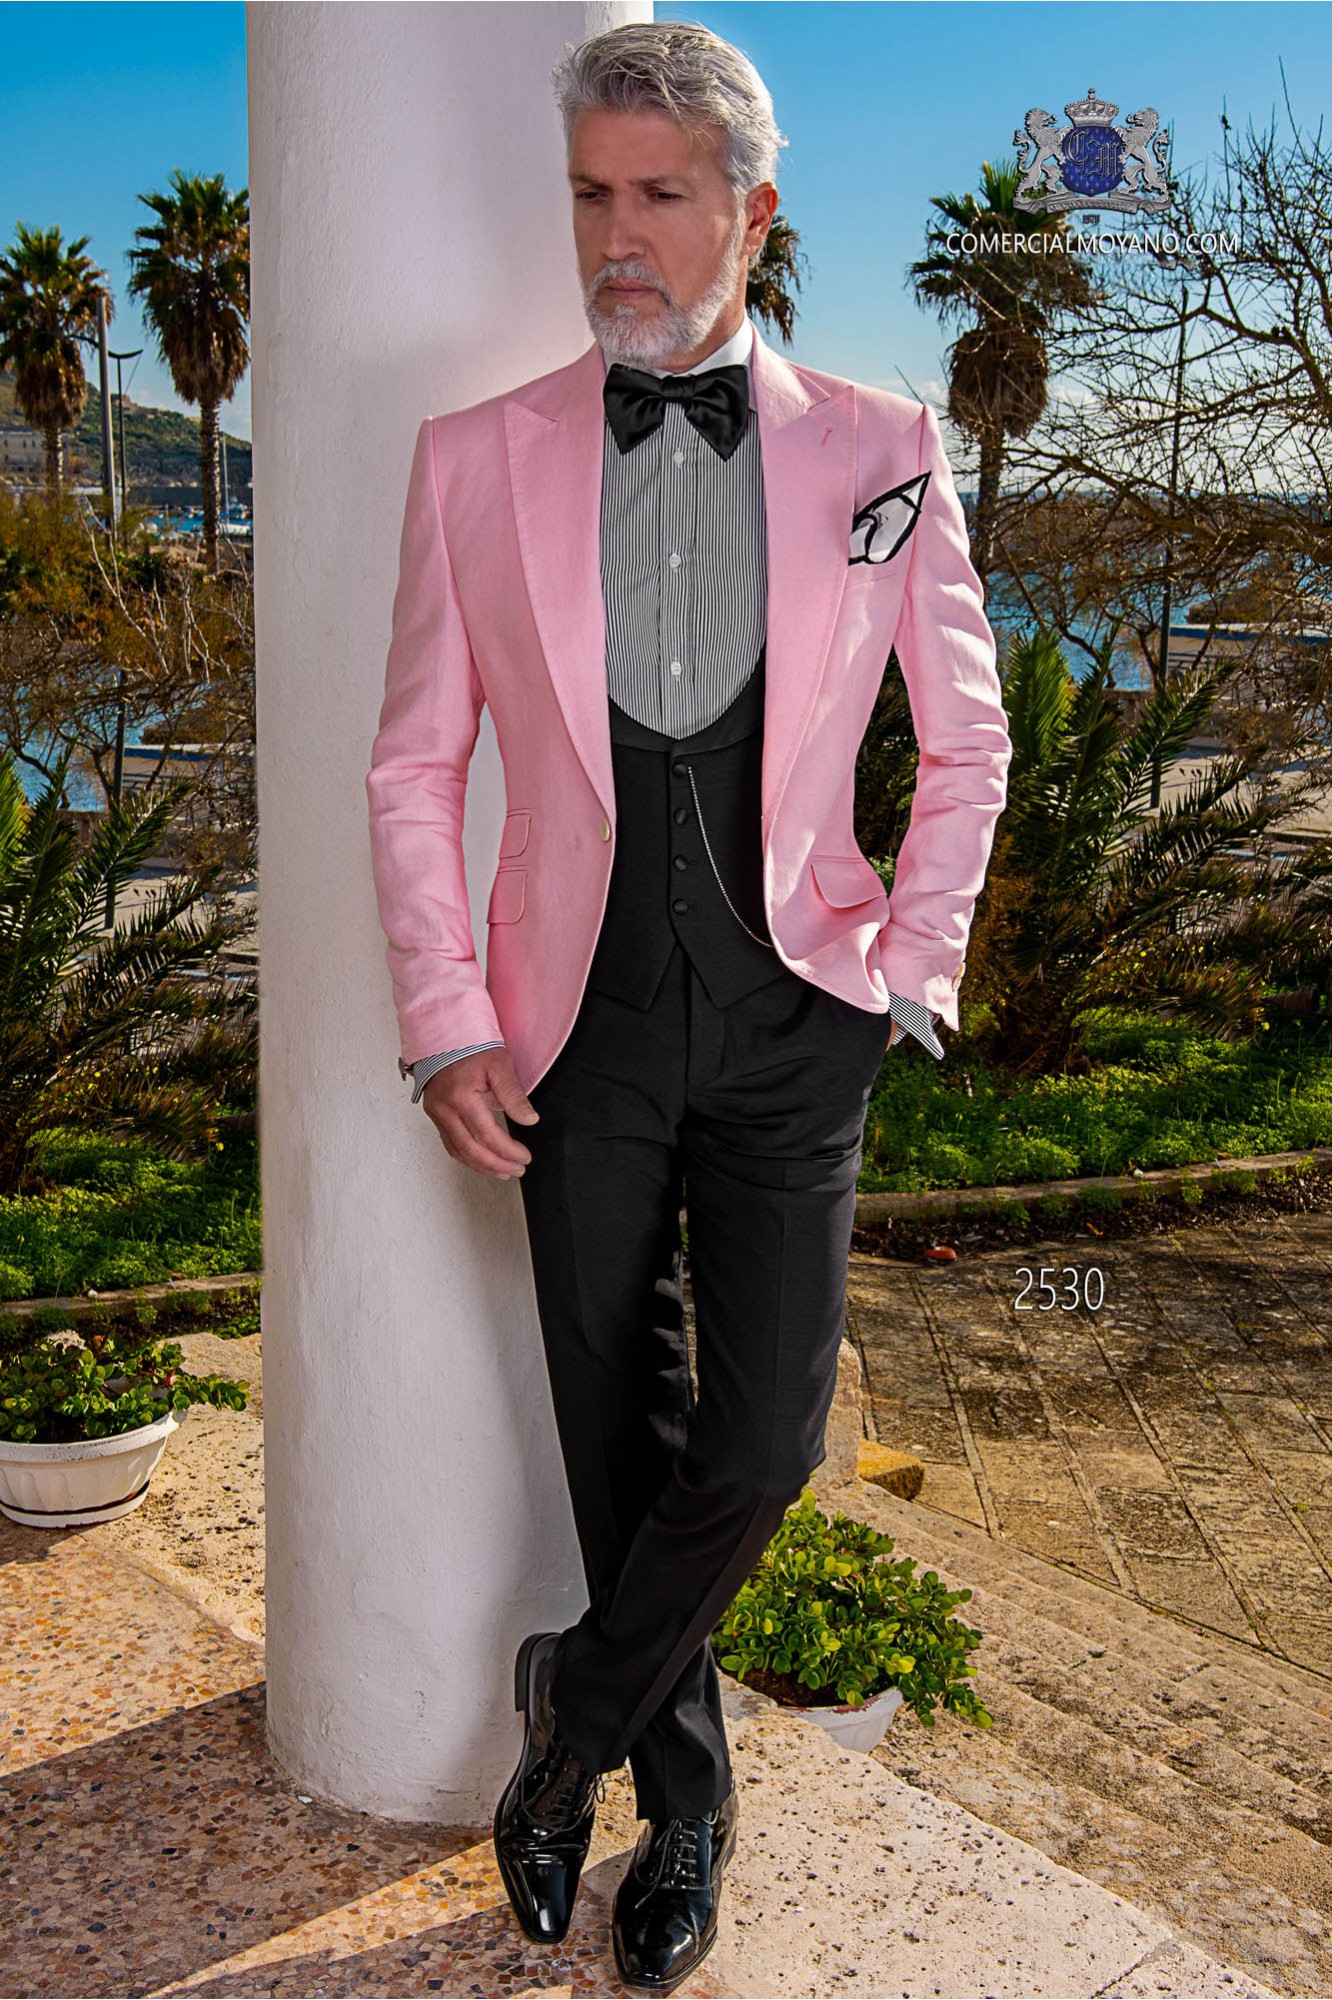 Traje de novio italiano a medida rosa de lino modelo: 2530 Mario Moyano colección Hipster